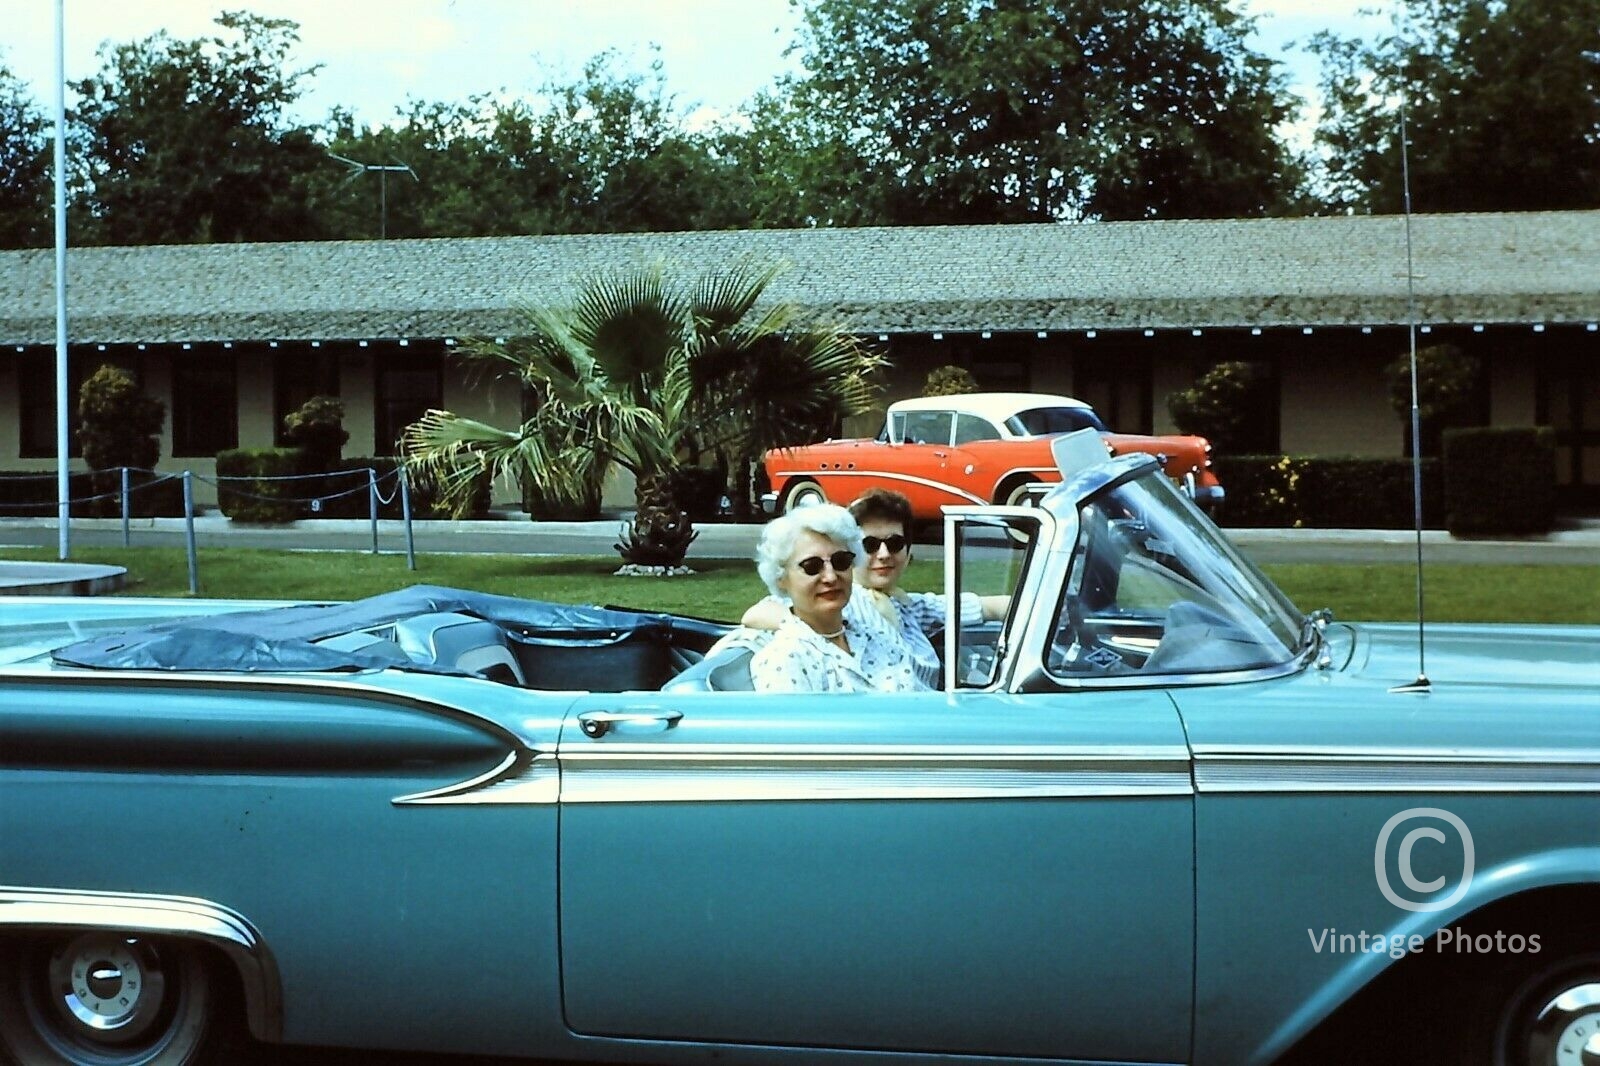 1959 American Classic Blue Convertible Car & 2 Women